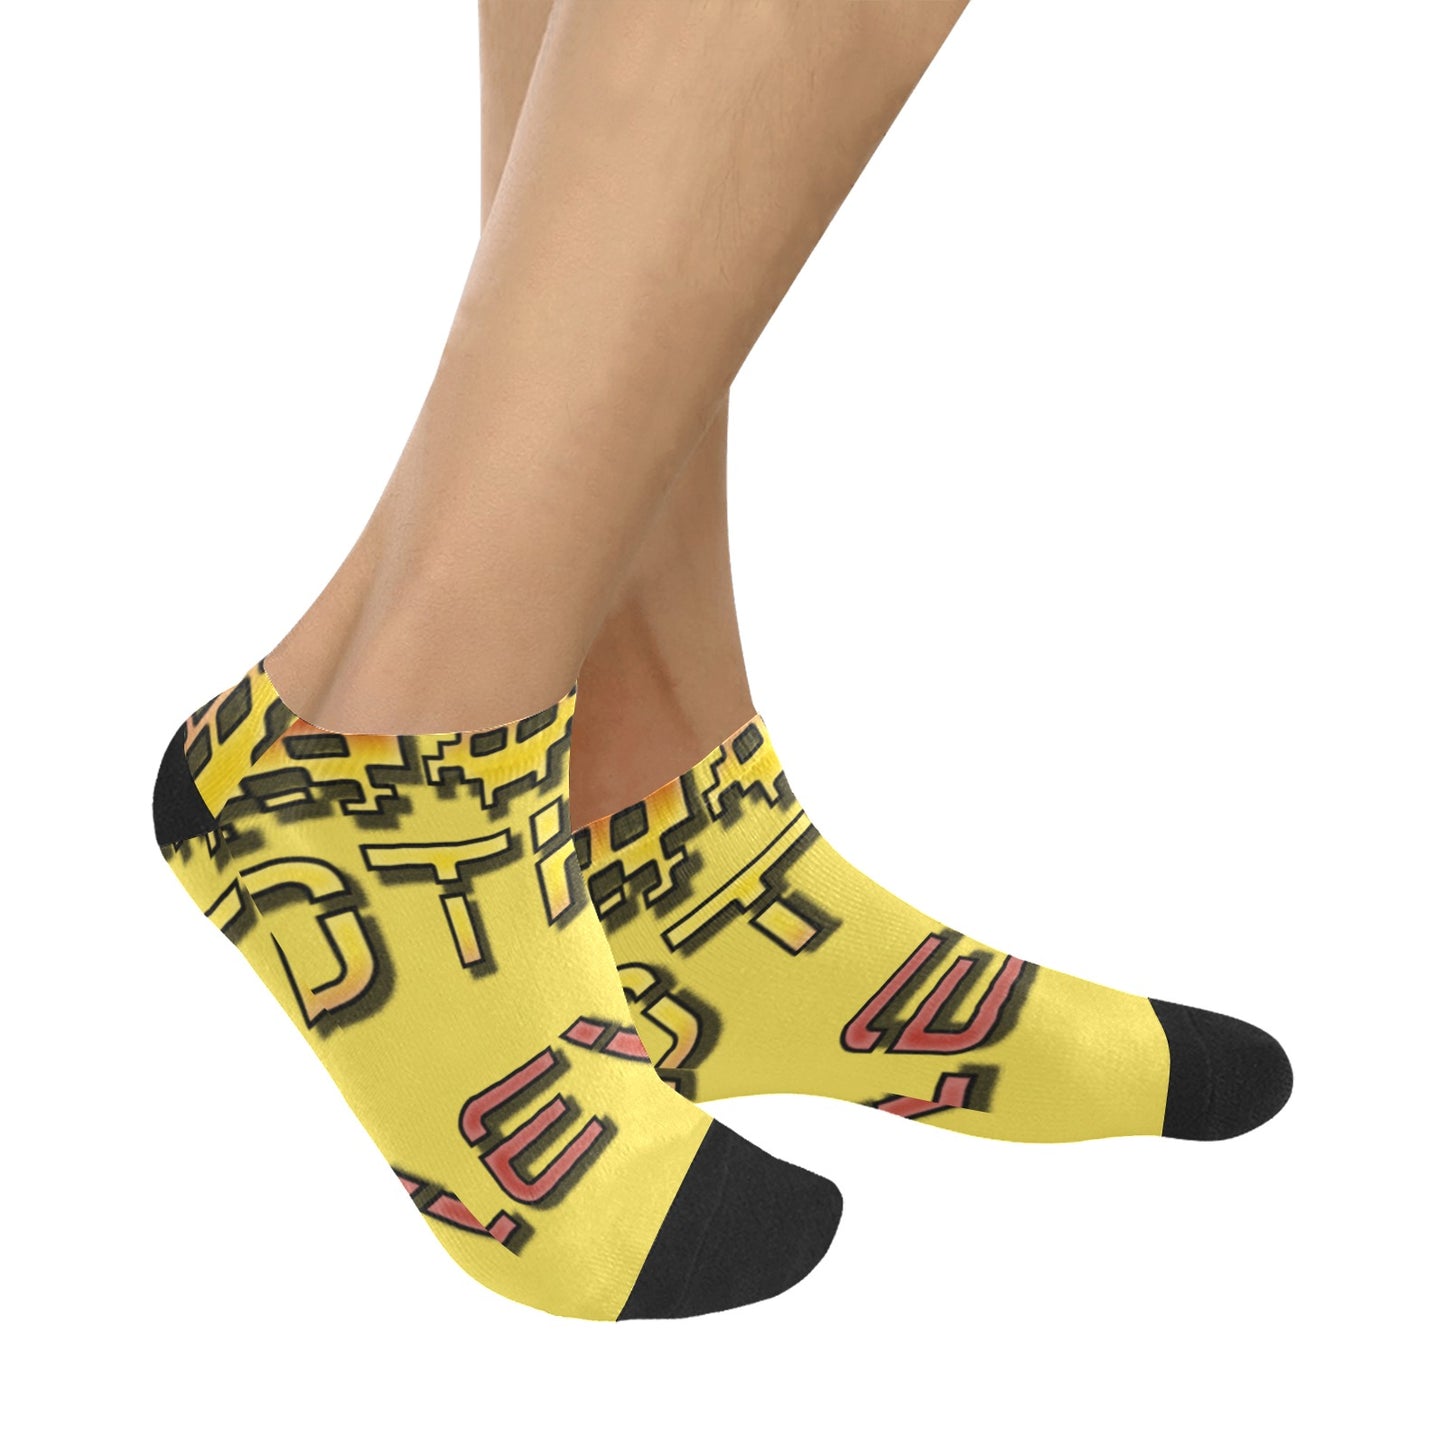 fz men's levels ankle socks one size / fz levels socks - yellow men's ankle socks